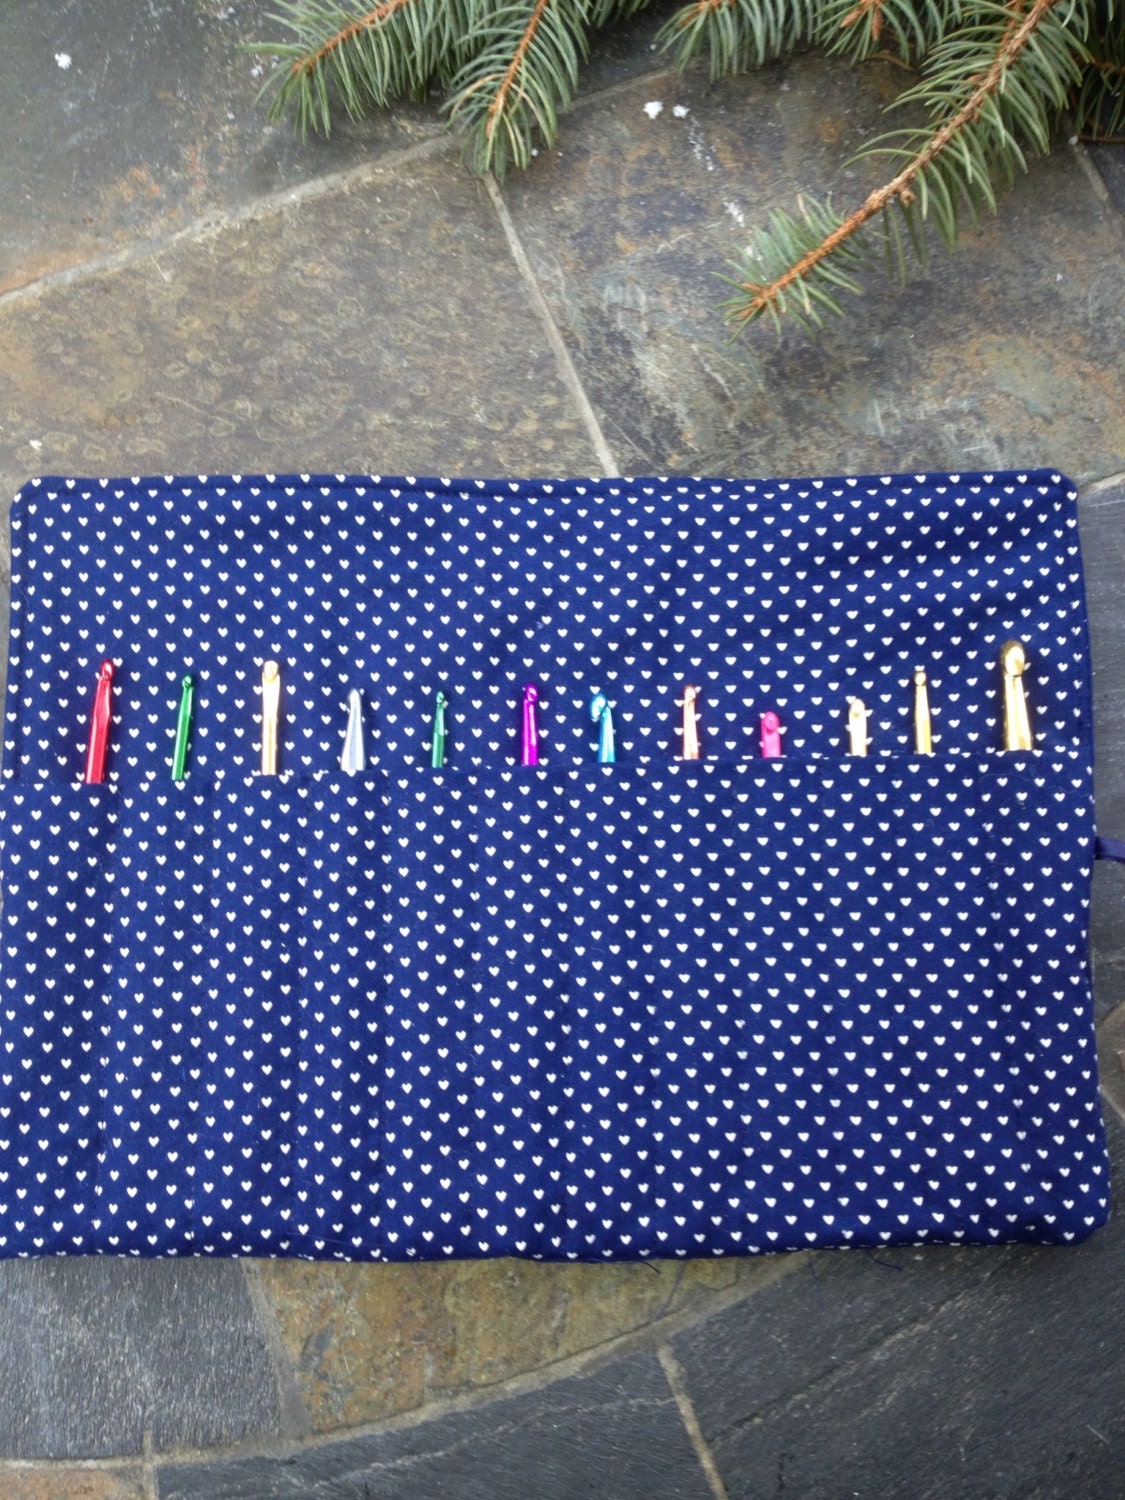 Crochet Hook Organizer/ Holder - Holds 12 Needles - Navy Blue with white hearts Print